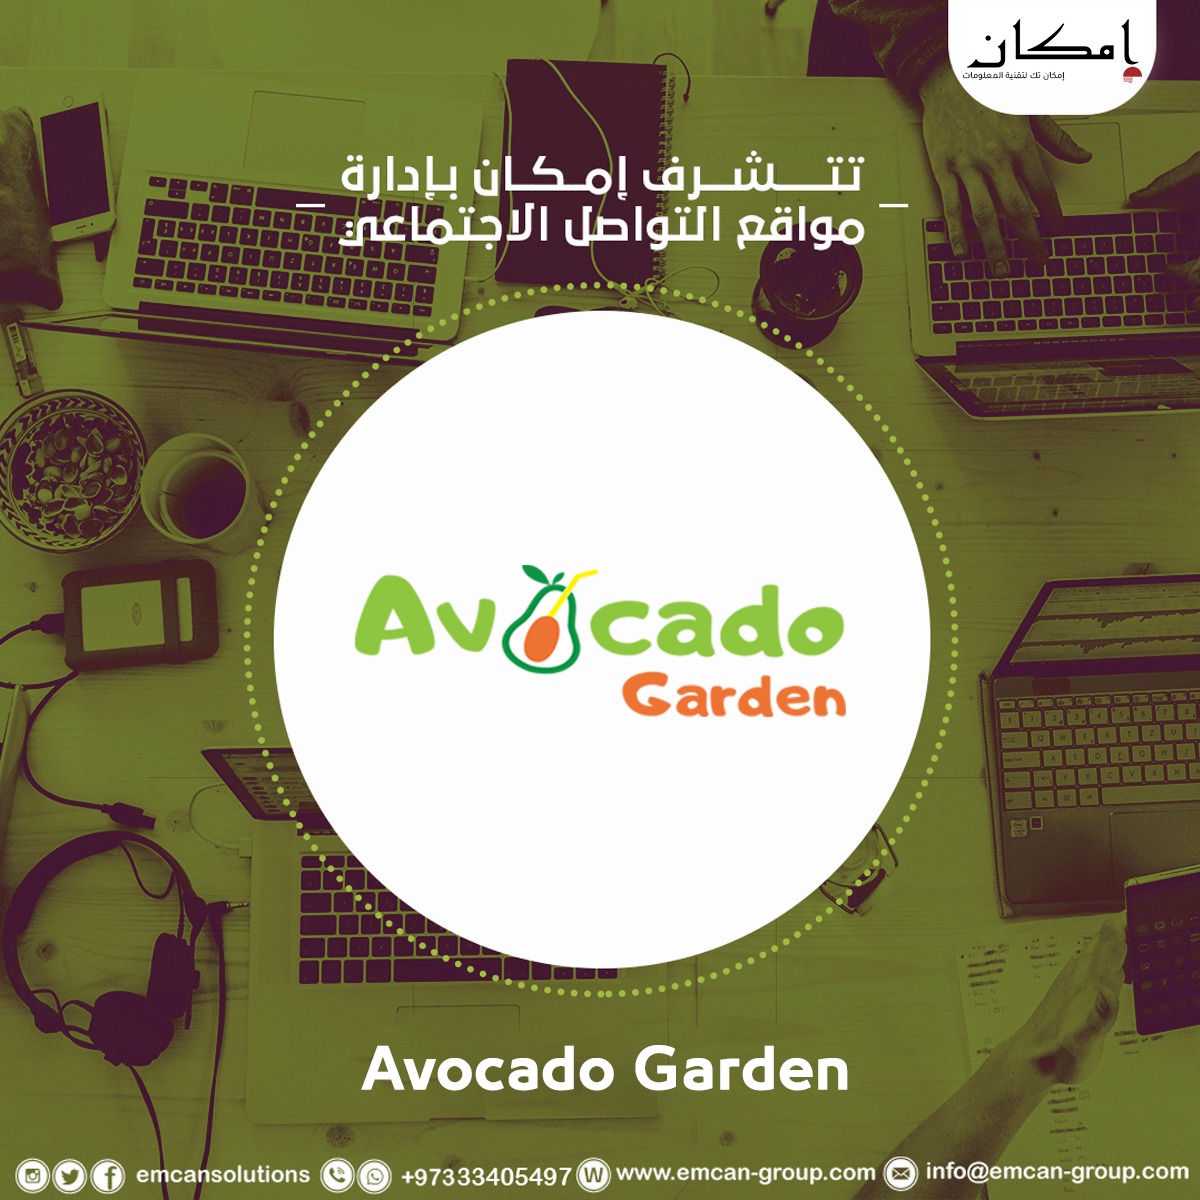 Social media management for Avocado Garden